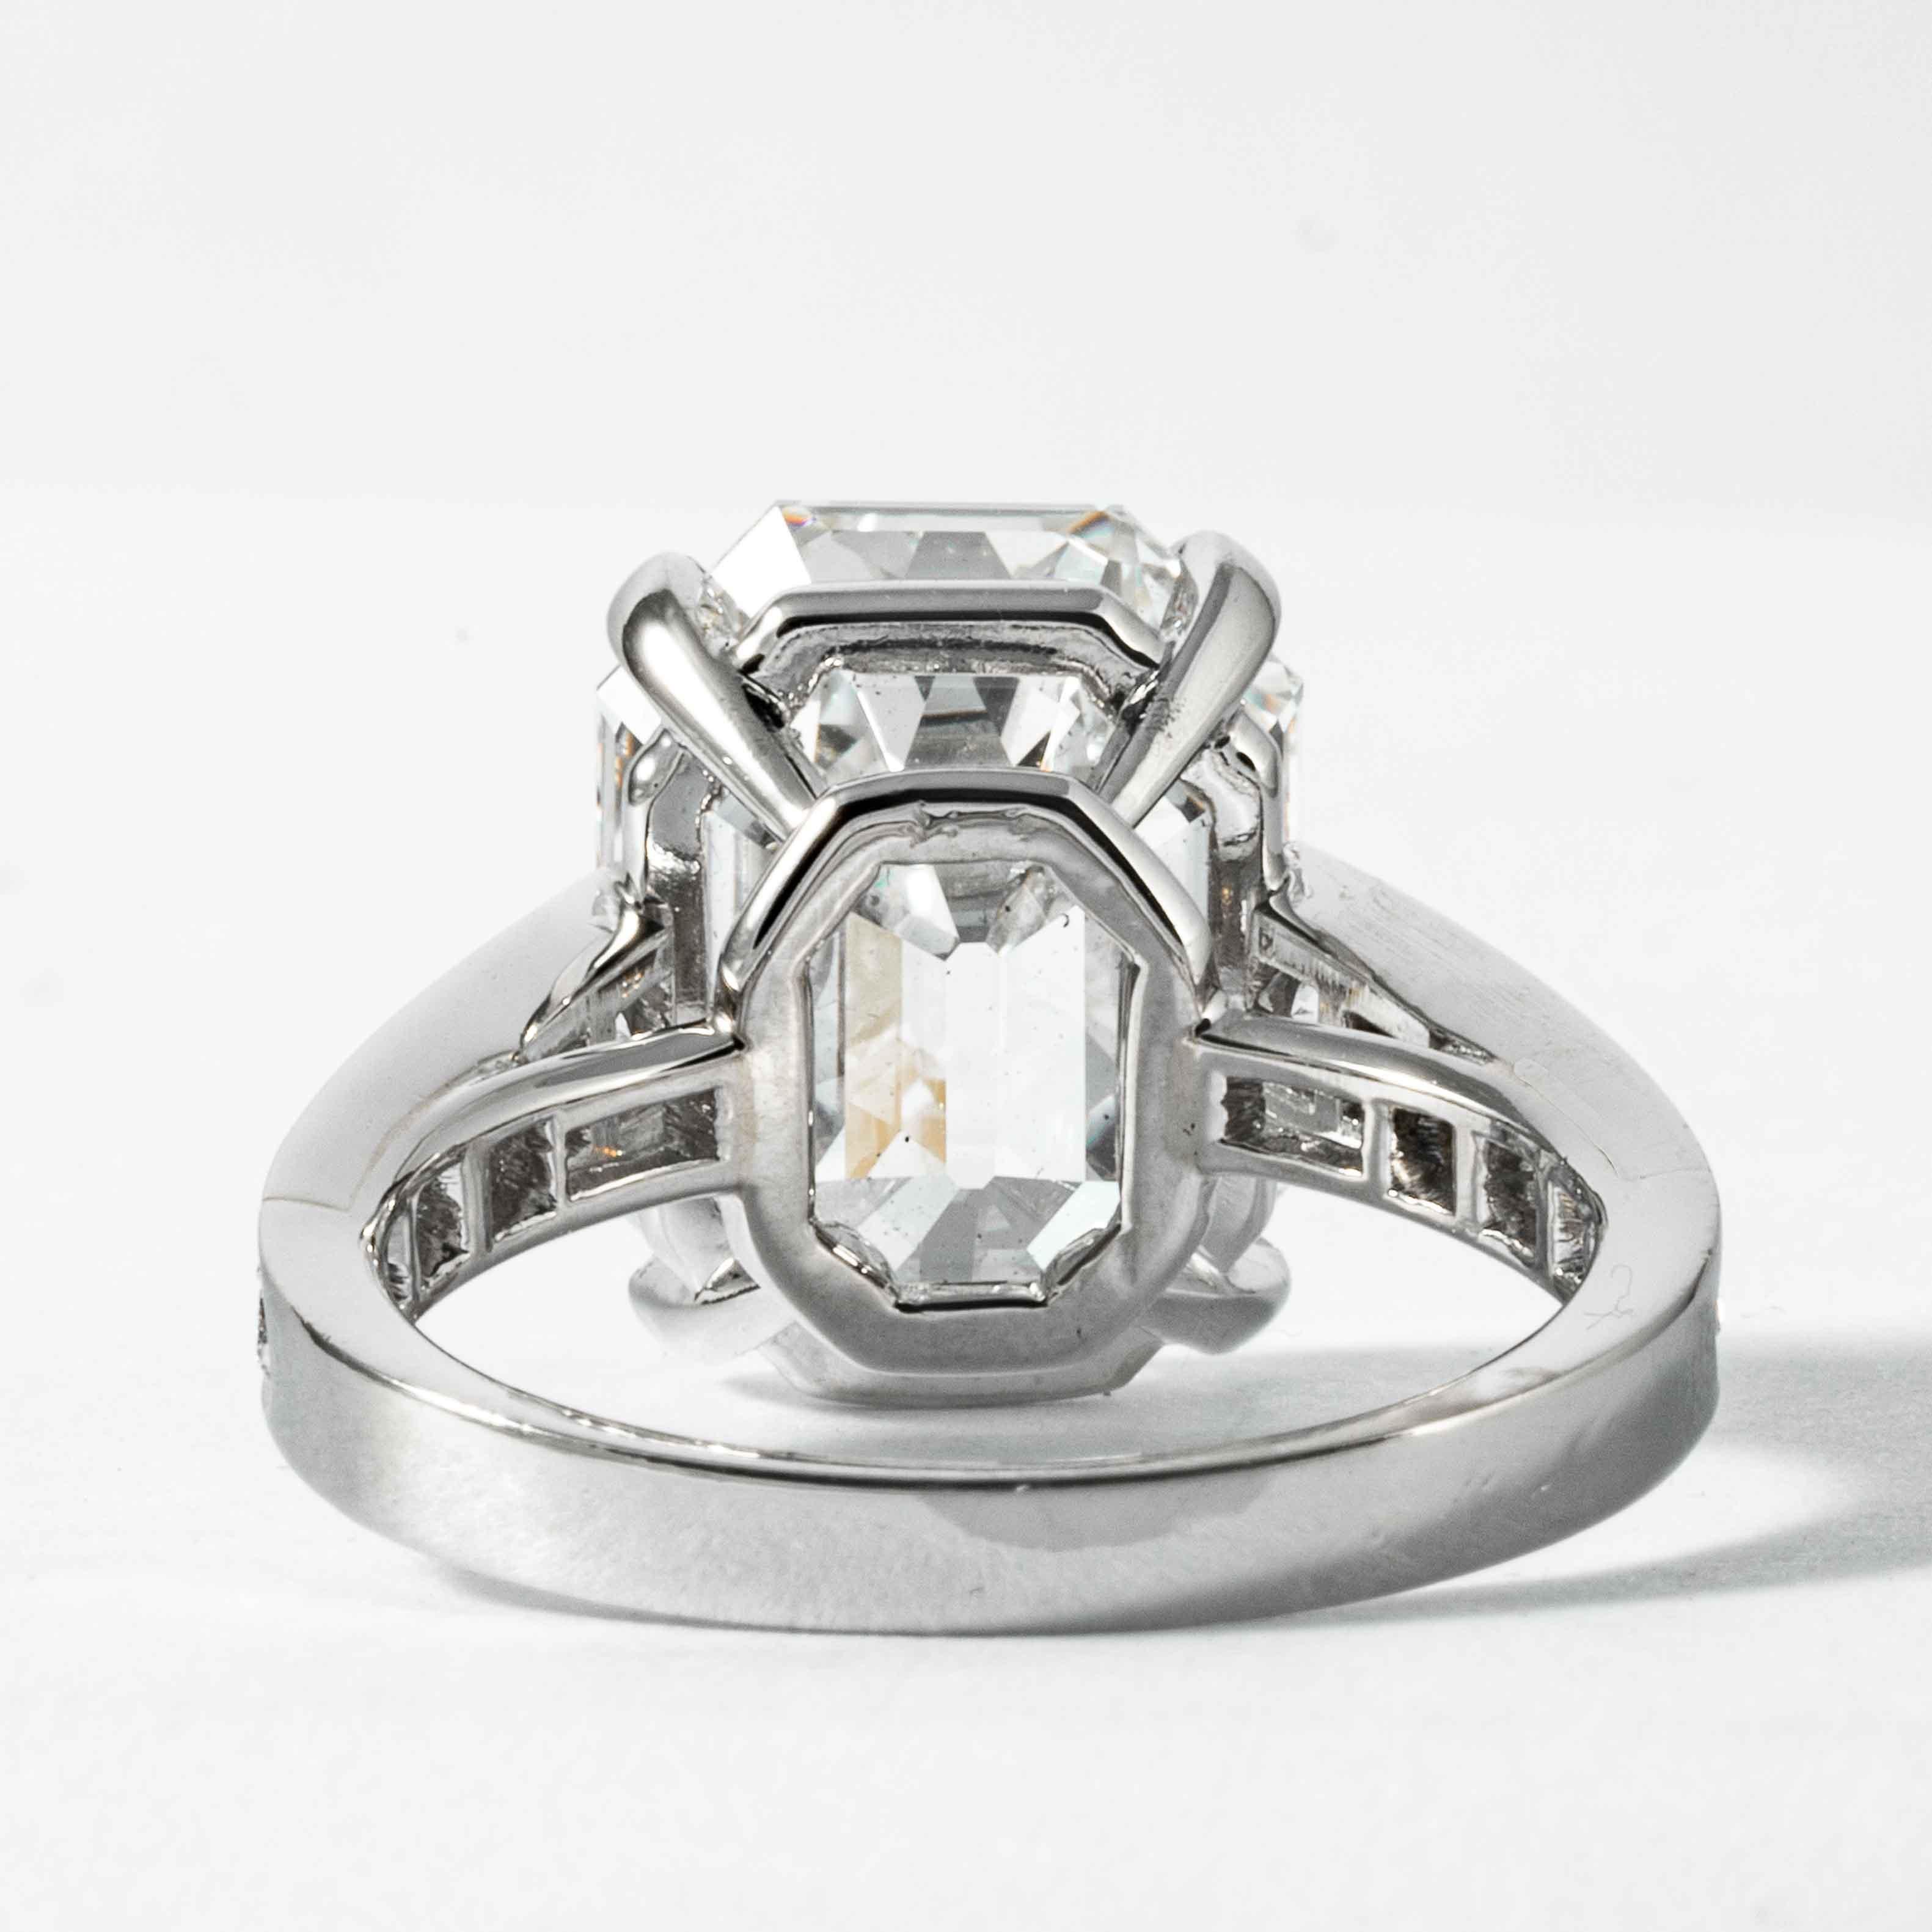 Shreve, Crump & Low GIA Certified 10.19 Carat H VS1 Emerald Cut Diamond Ring 1